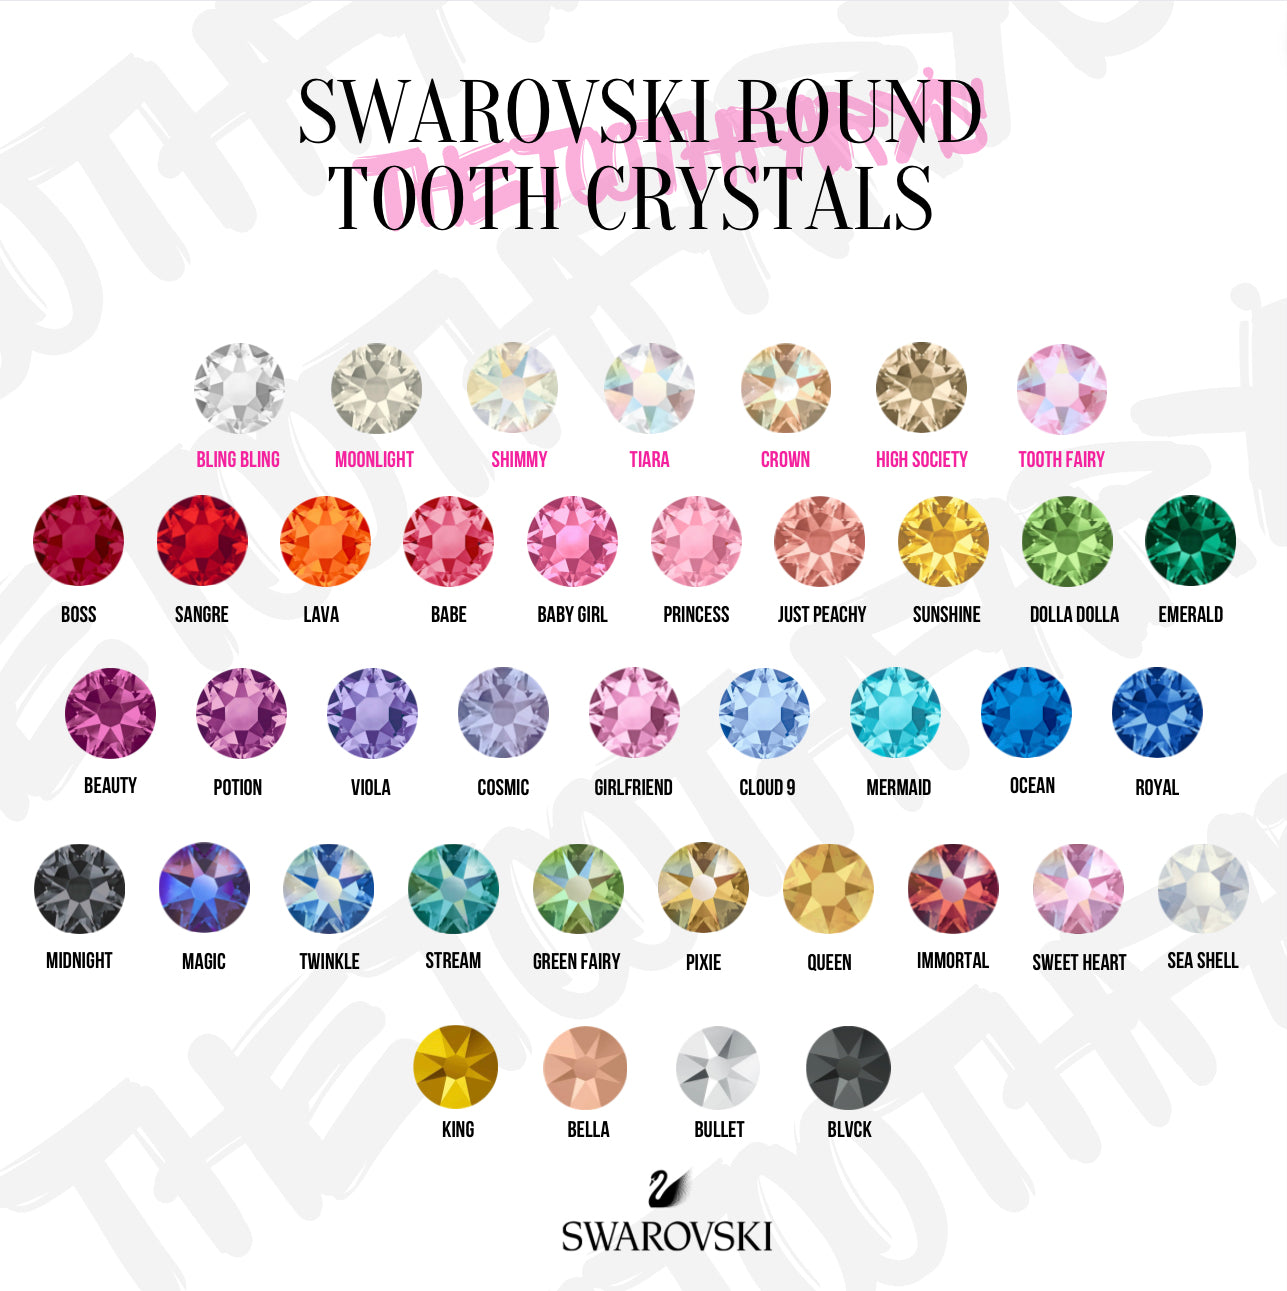 Fairy Dust Swarovski Crystals (10+ applications) – Swarovski Tooth